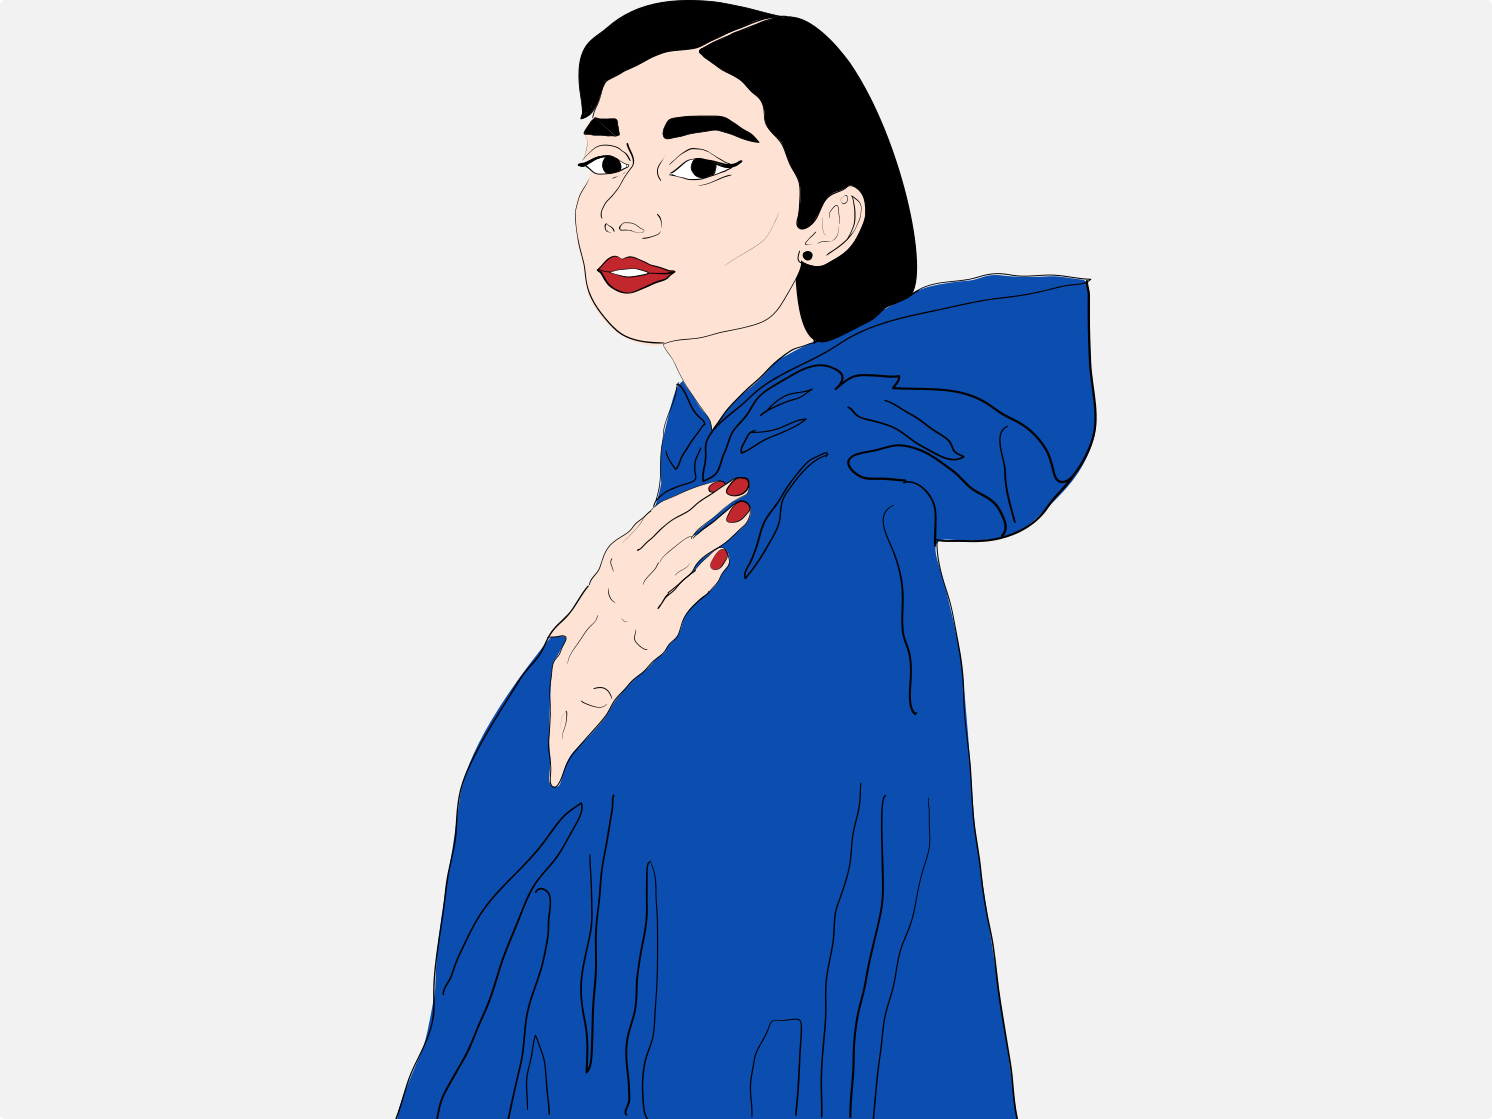 Audrey Hepburn in a blue coat